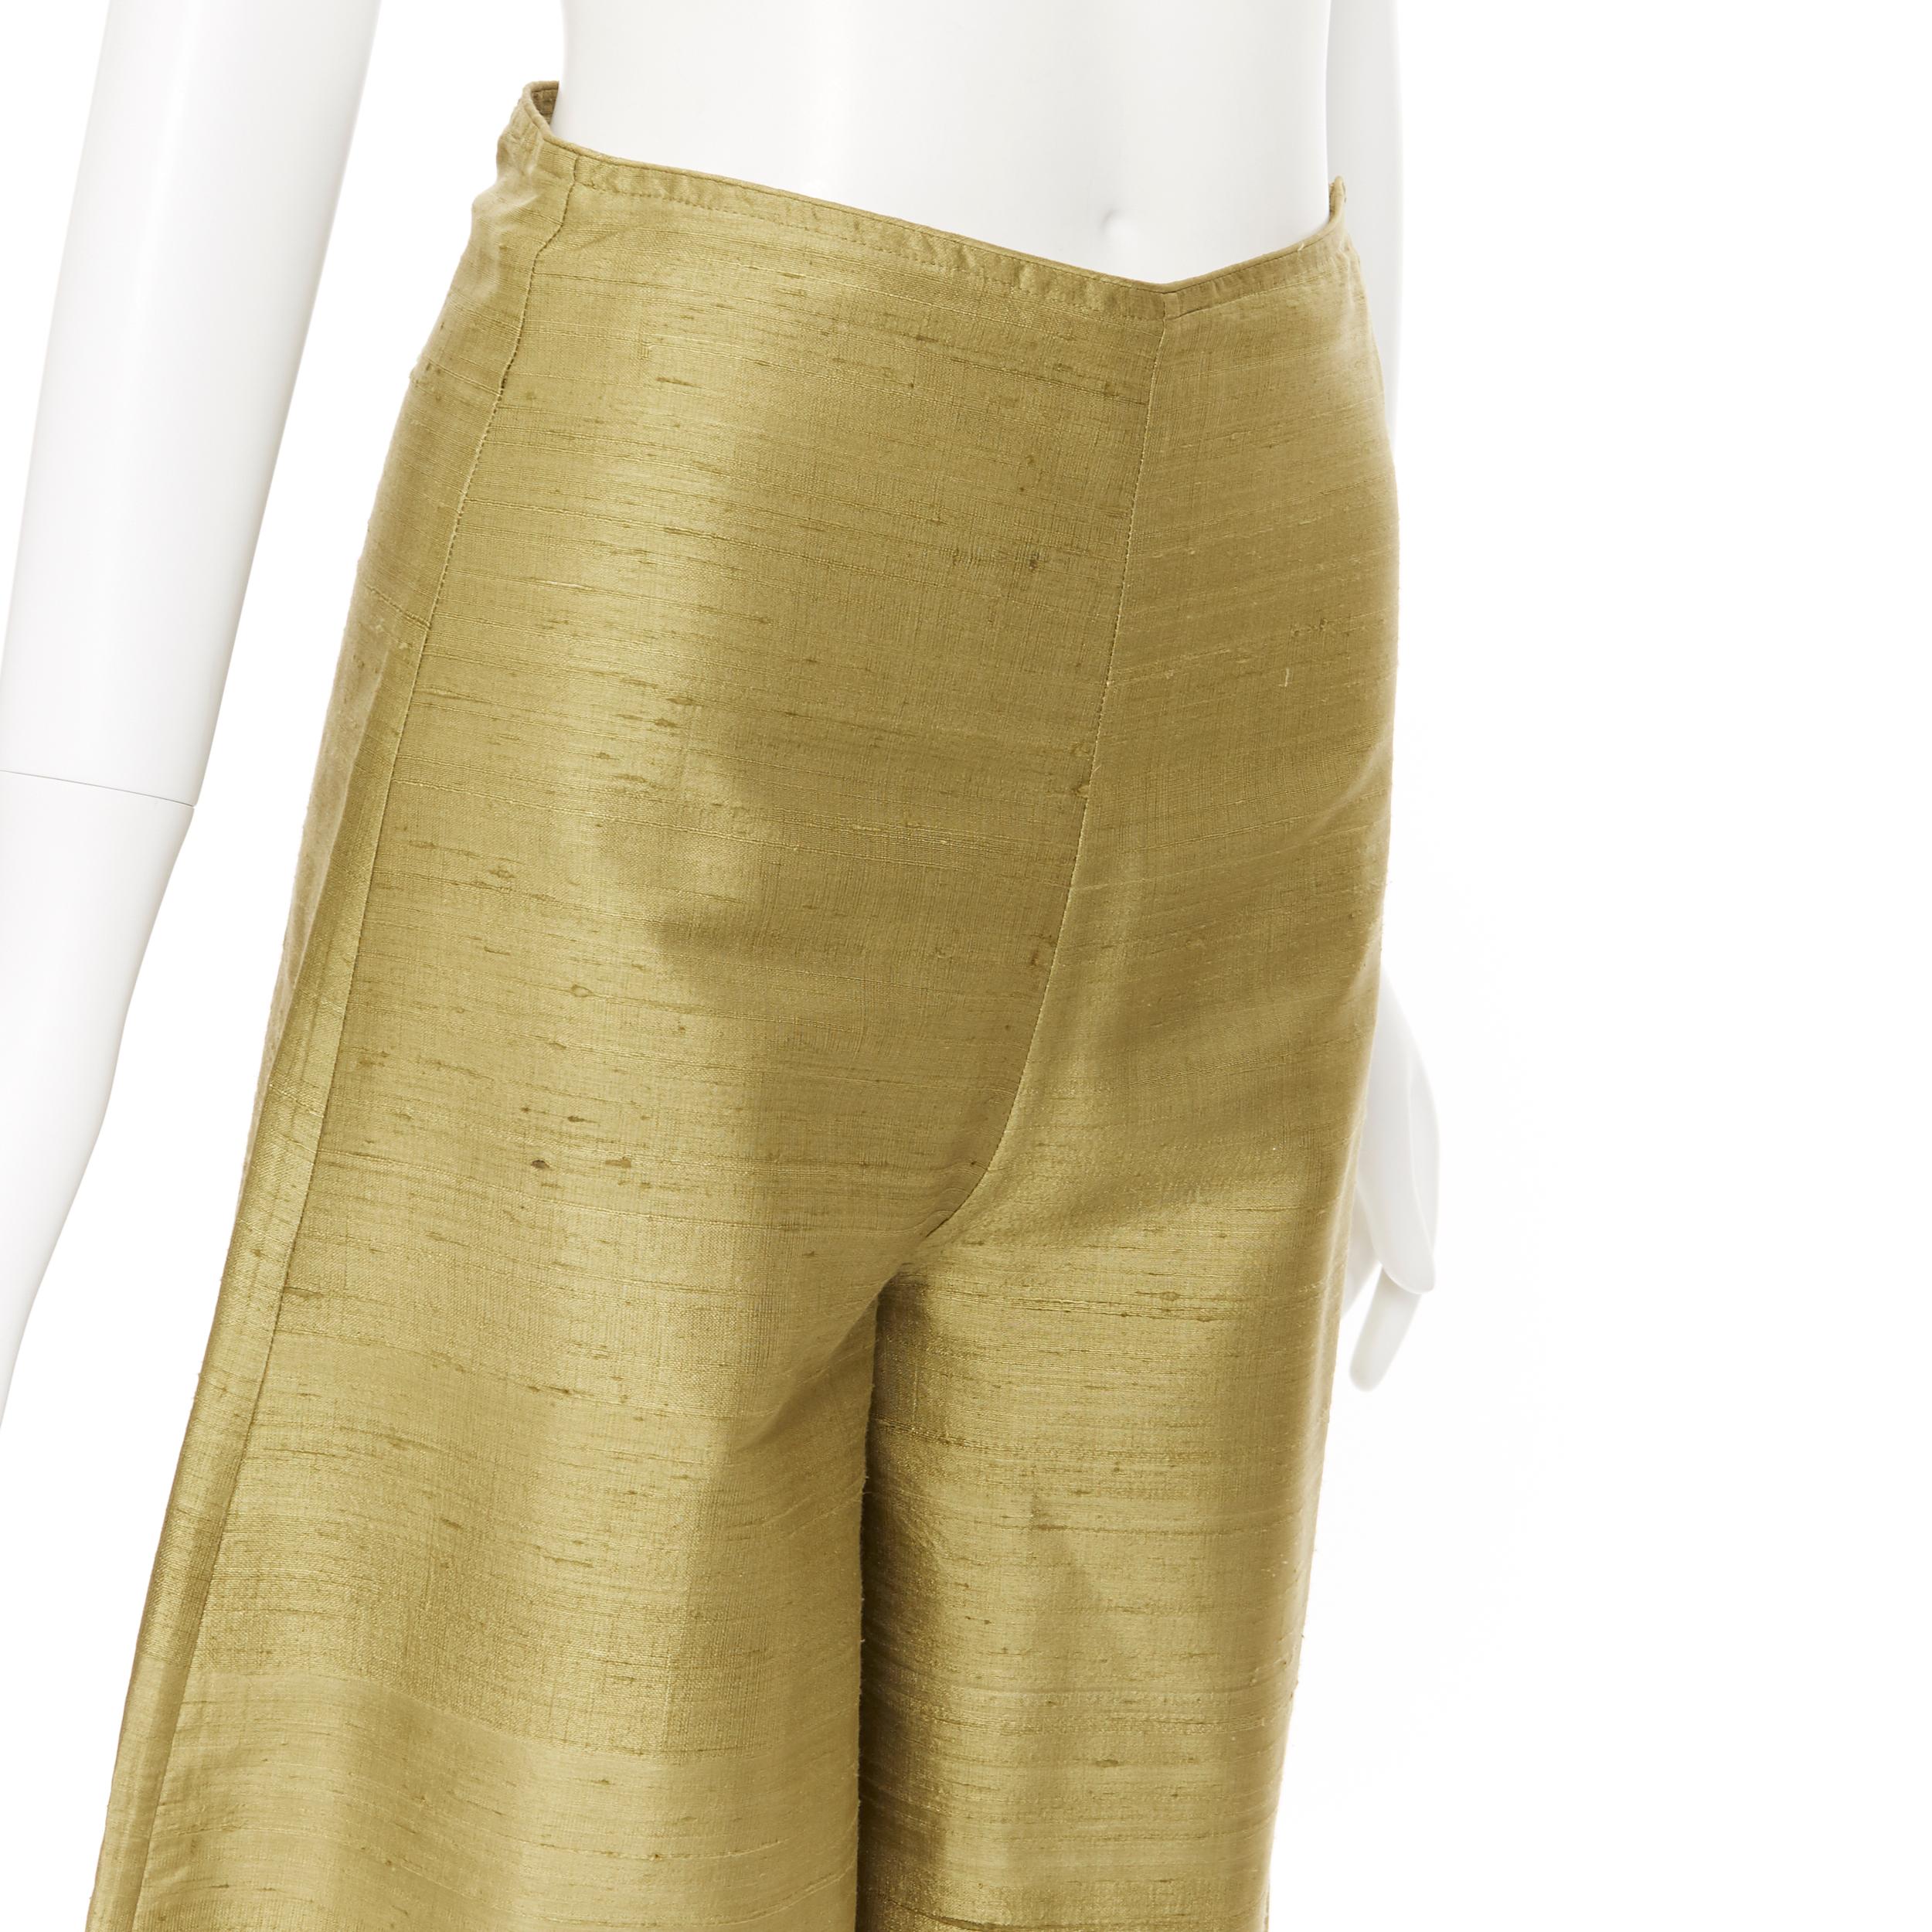 RHODE Resort 100% raw silk green wide flared trousers pants XS 26